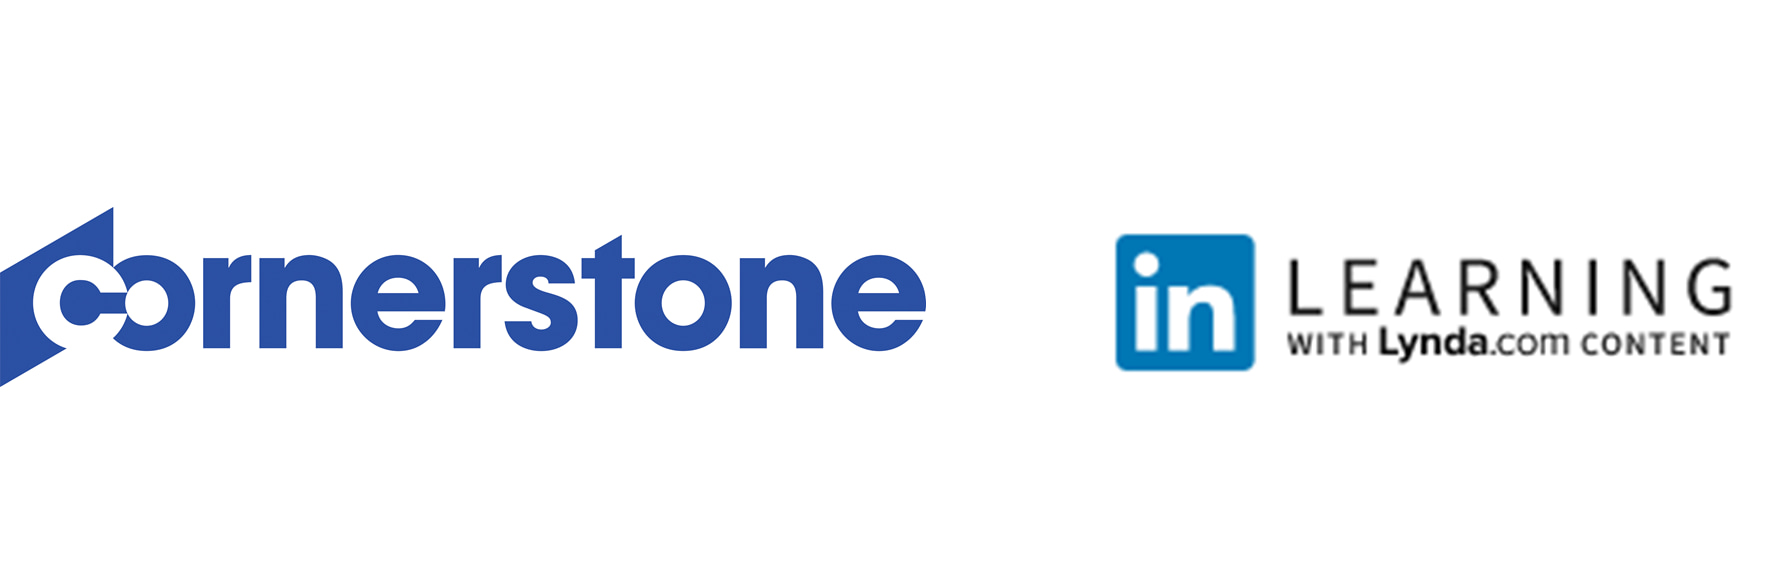 Cornerstone 和 LinkedIn Learning